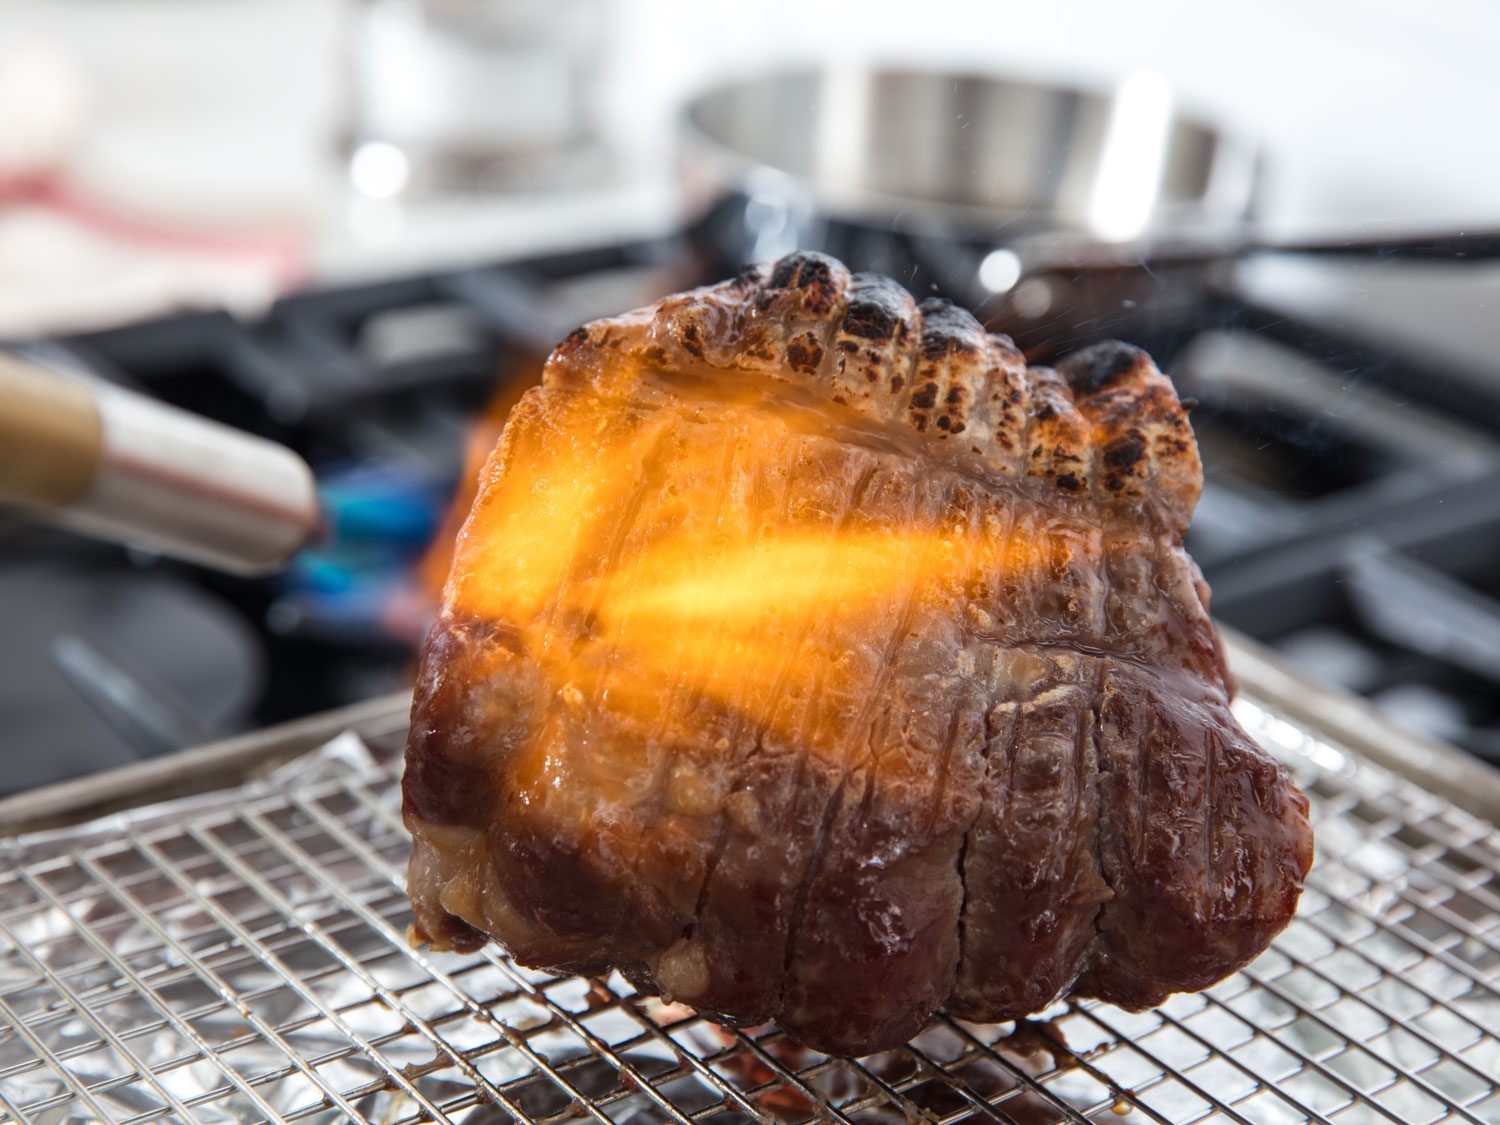 Handheld torch charring exterior of pork shoulder chashu roast